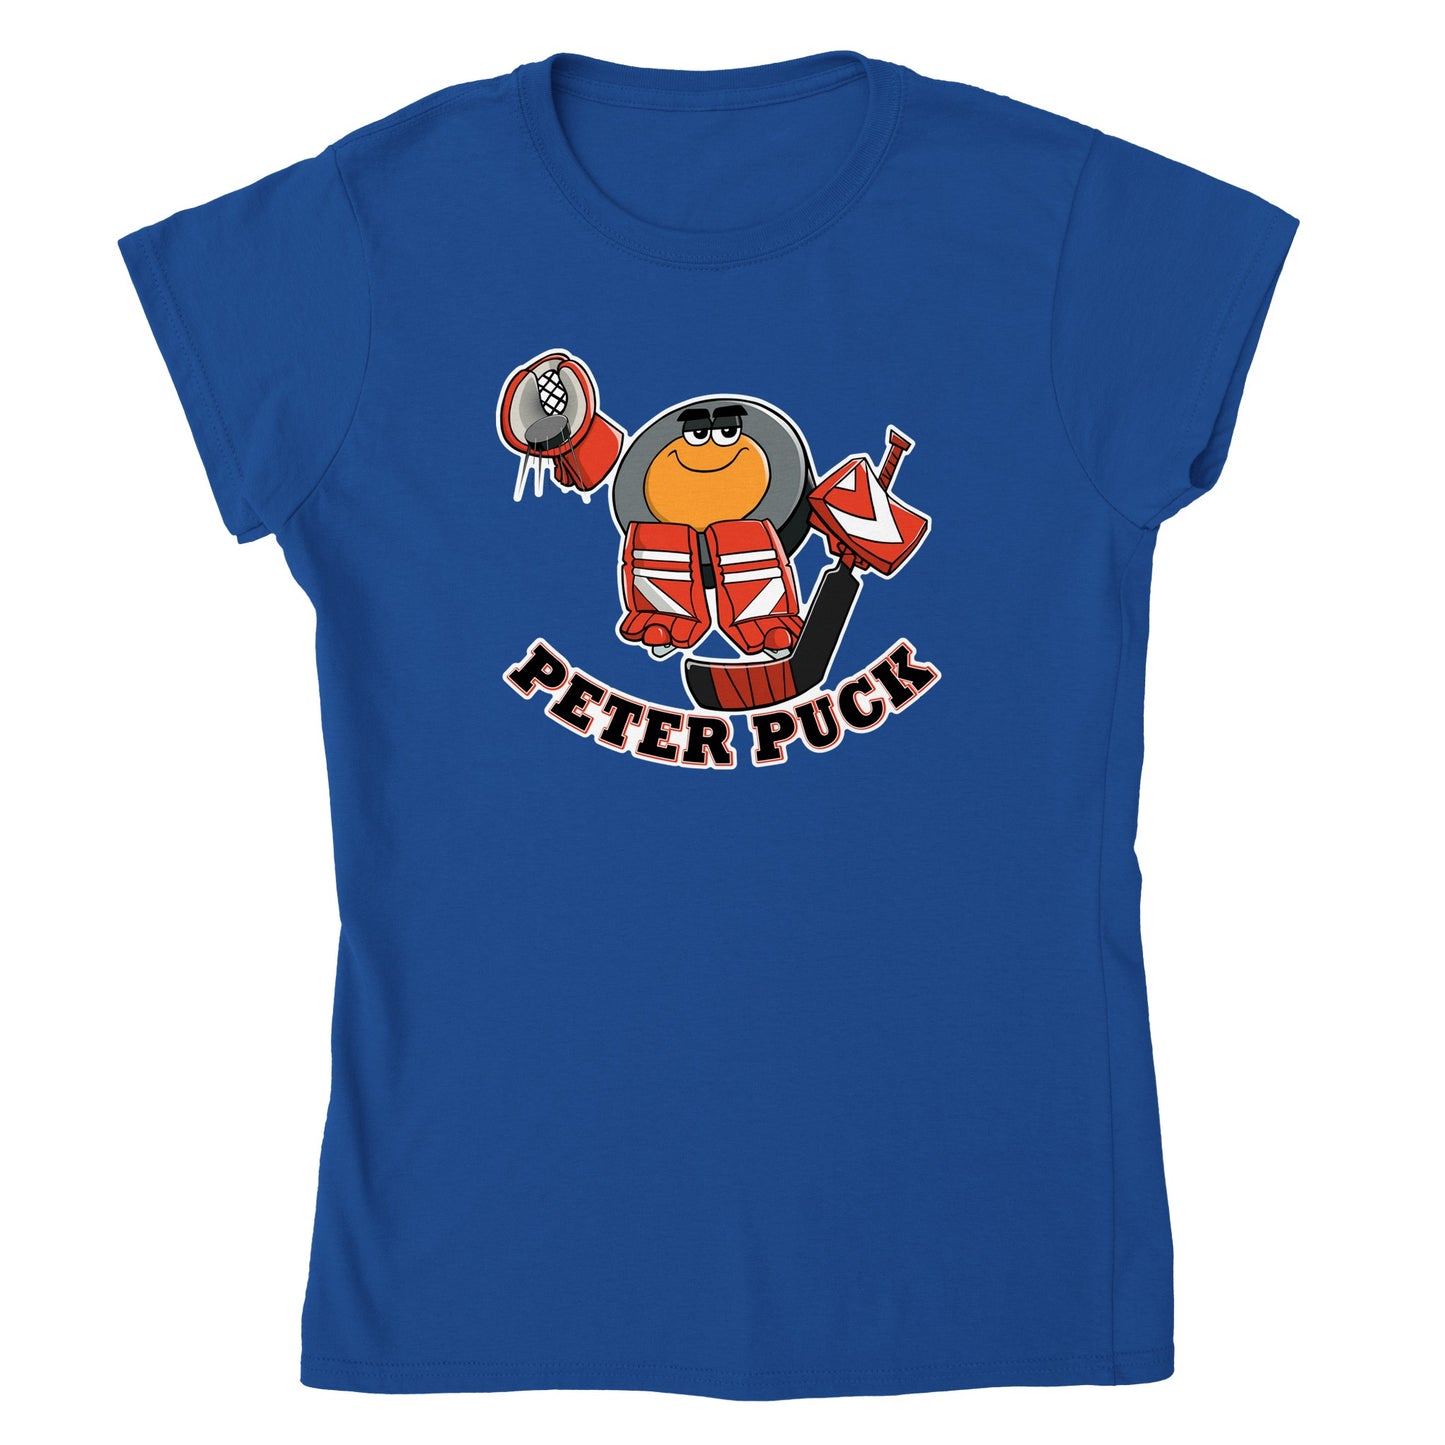 Peter Puck Goalie Save Classic Womens Crewneck T-shirt